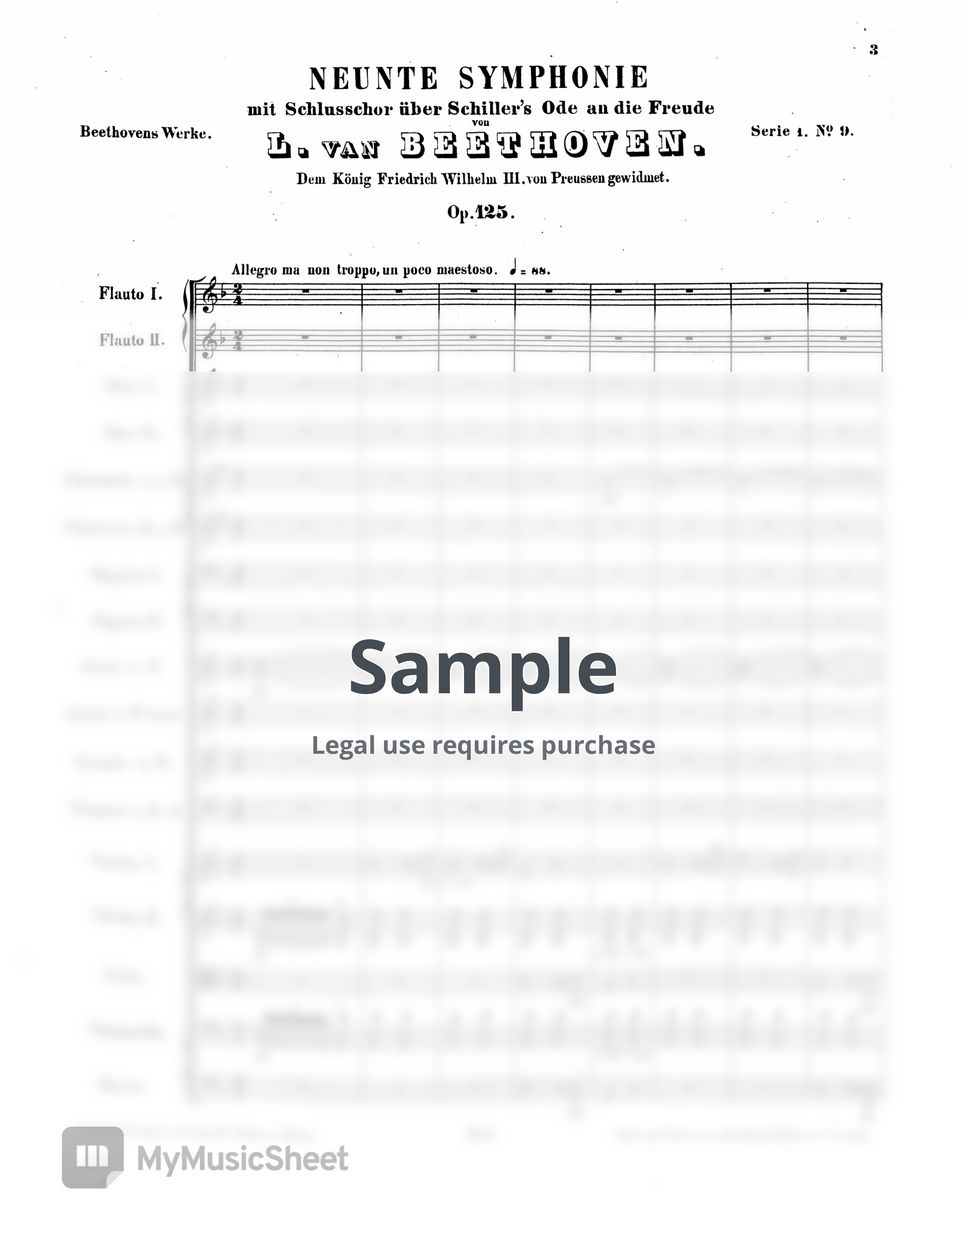 L. V. Beethoven - Symphony No. 9 in D minor (Choral Symphony) by Original Score